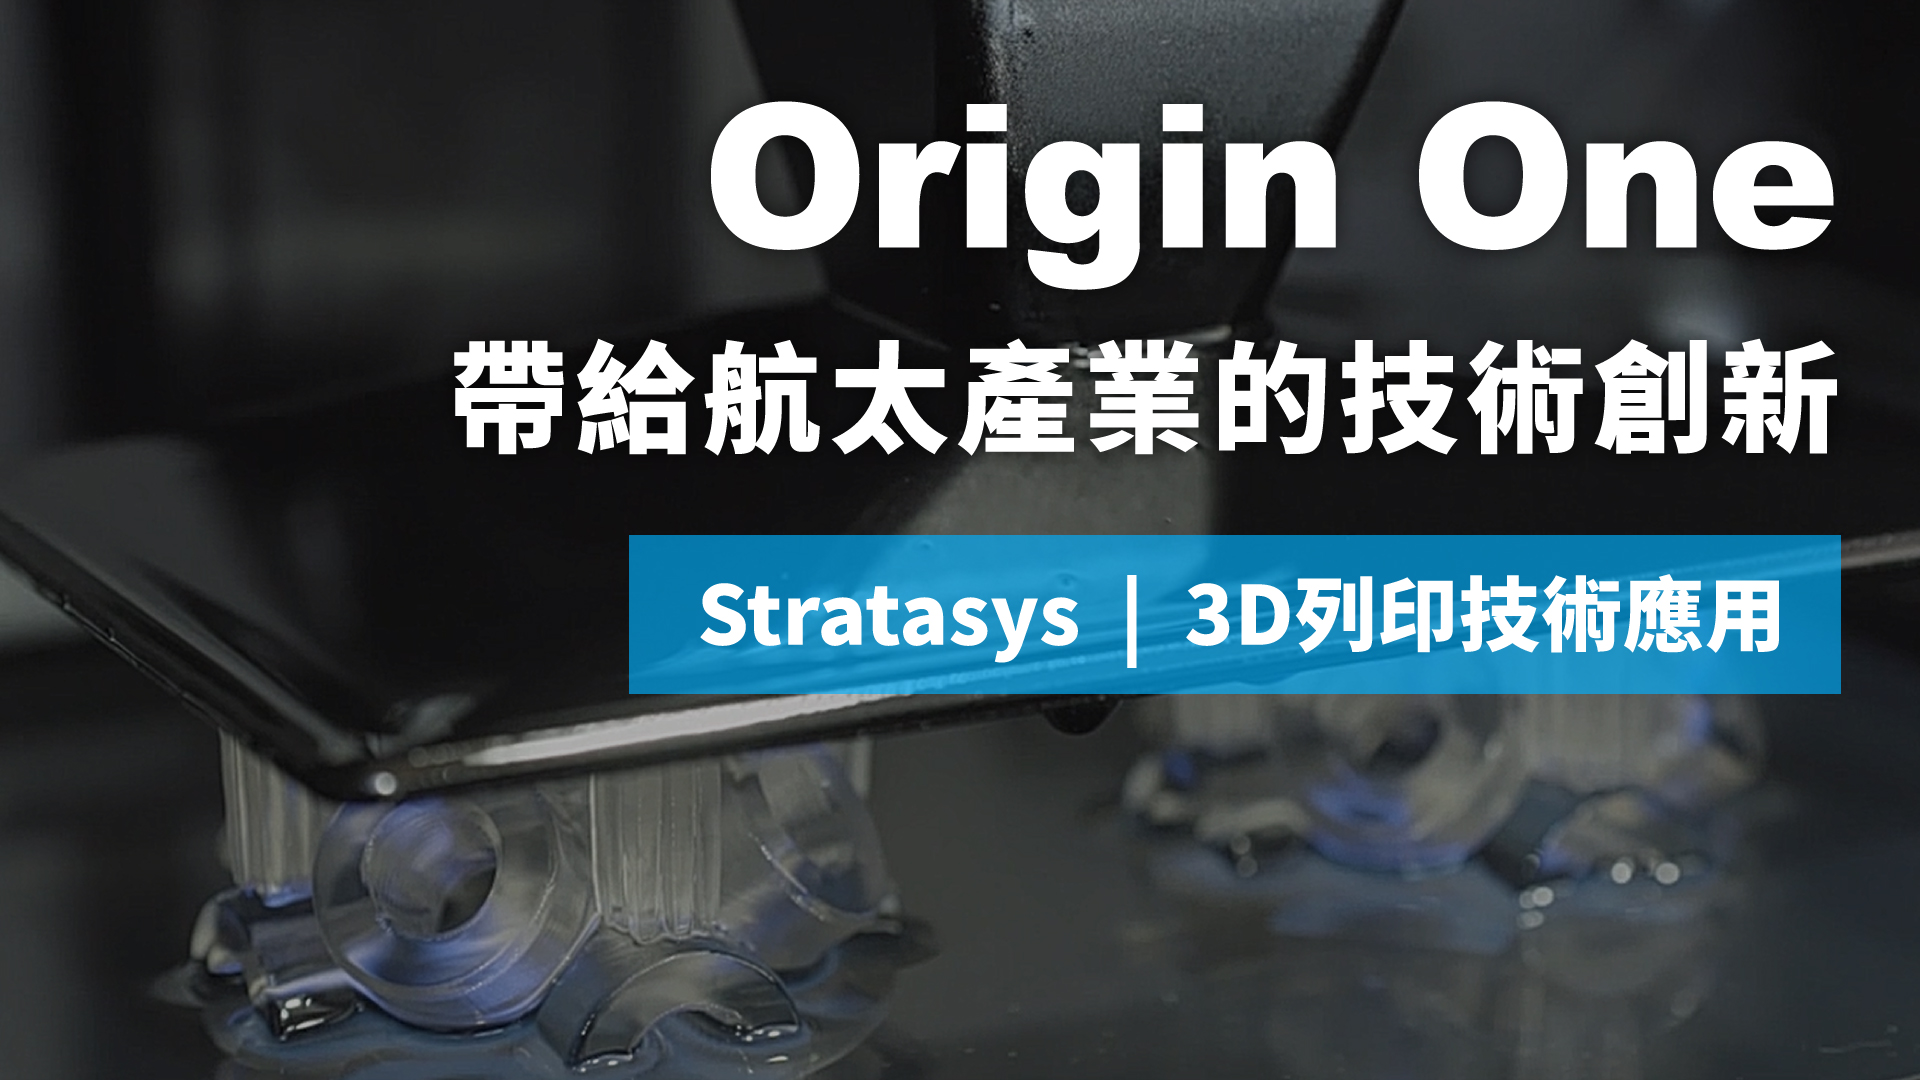 3D列印技術應用 | Origin One帶給航太產業的技術創新